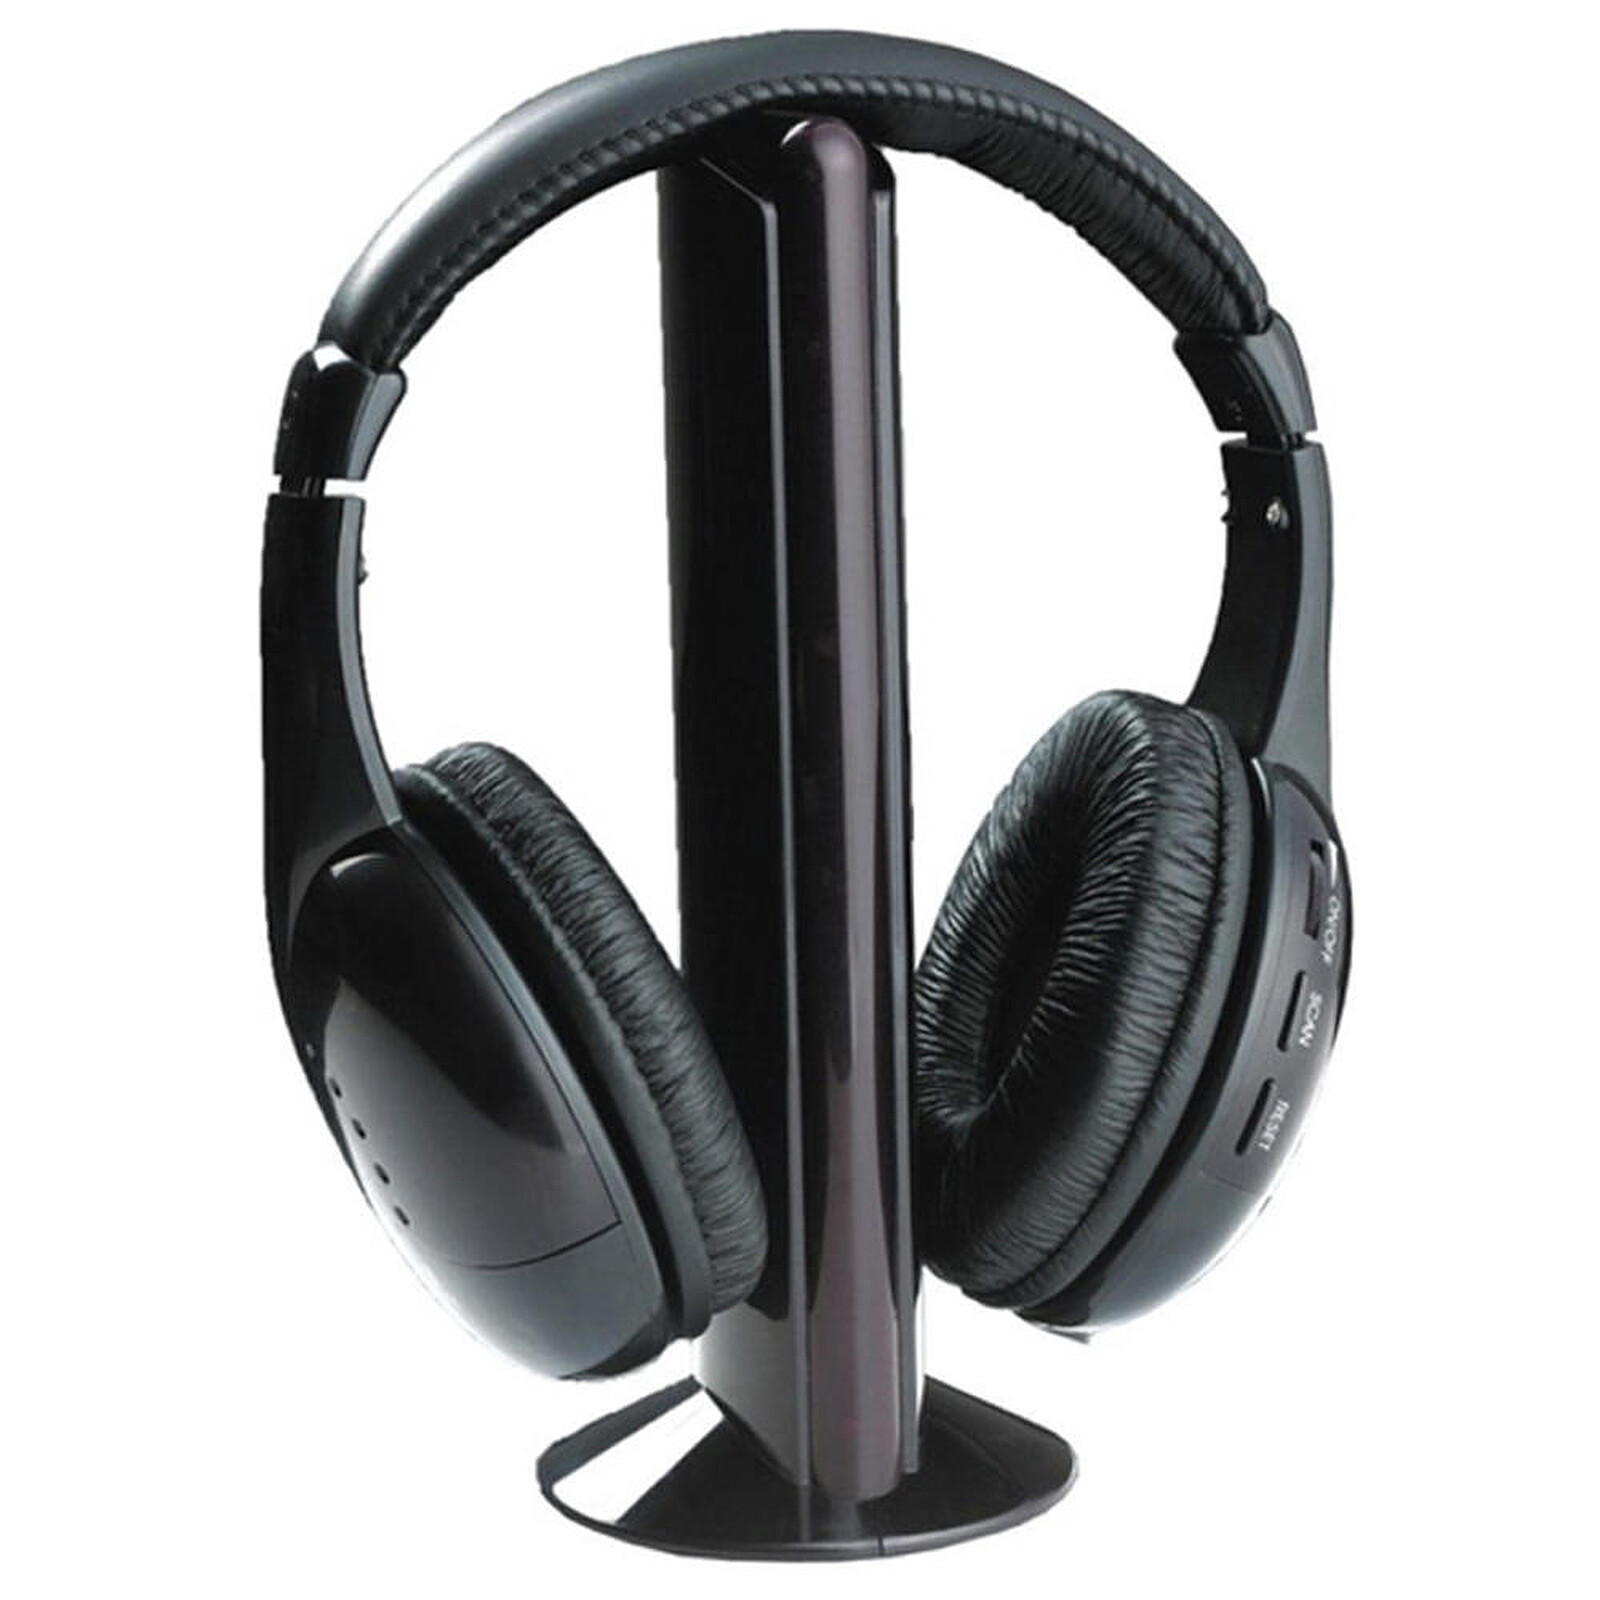 Auriculares infantiles Belkin SoundForm Mini 85 db (Negro) - Auriculares -  LDLC